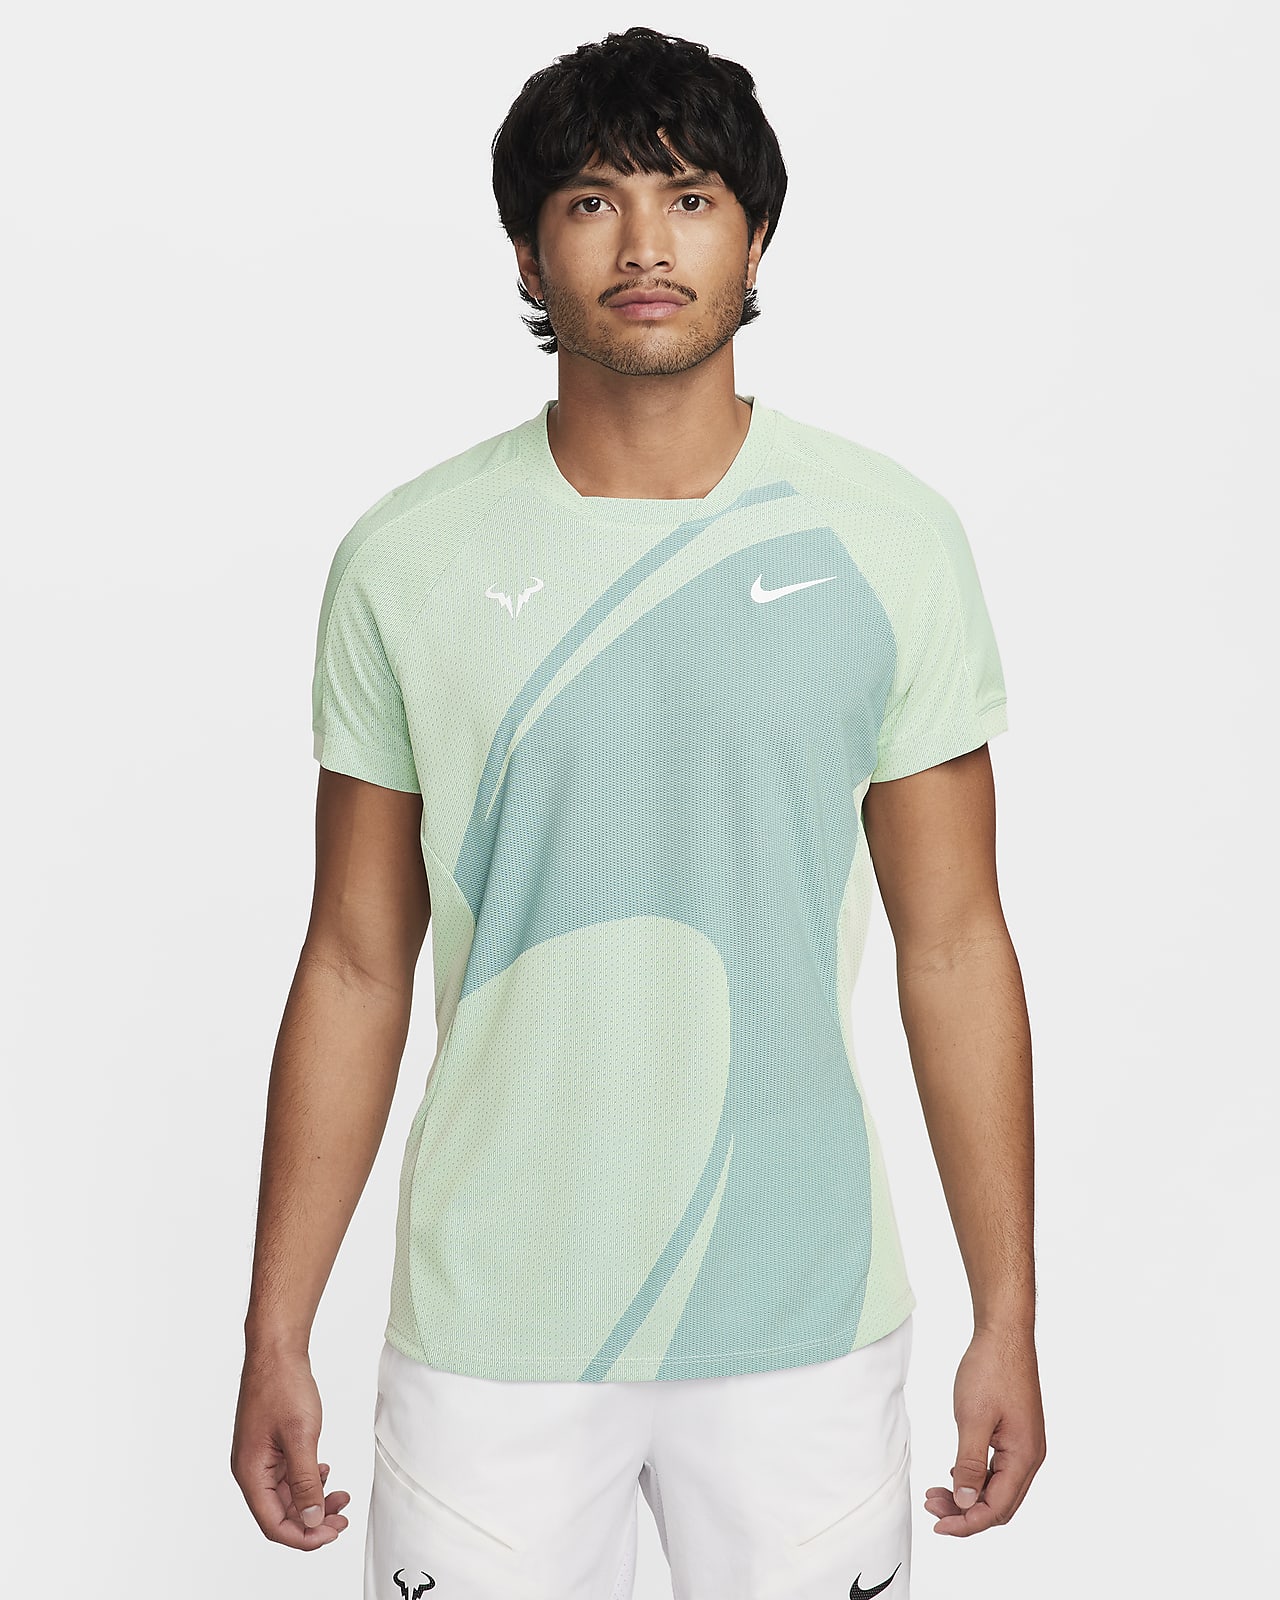 Rafa Nike Dri-FIT ADV Kısa Kollu Erkek Tenis Üstü